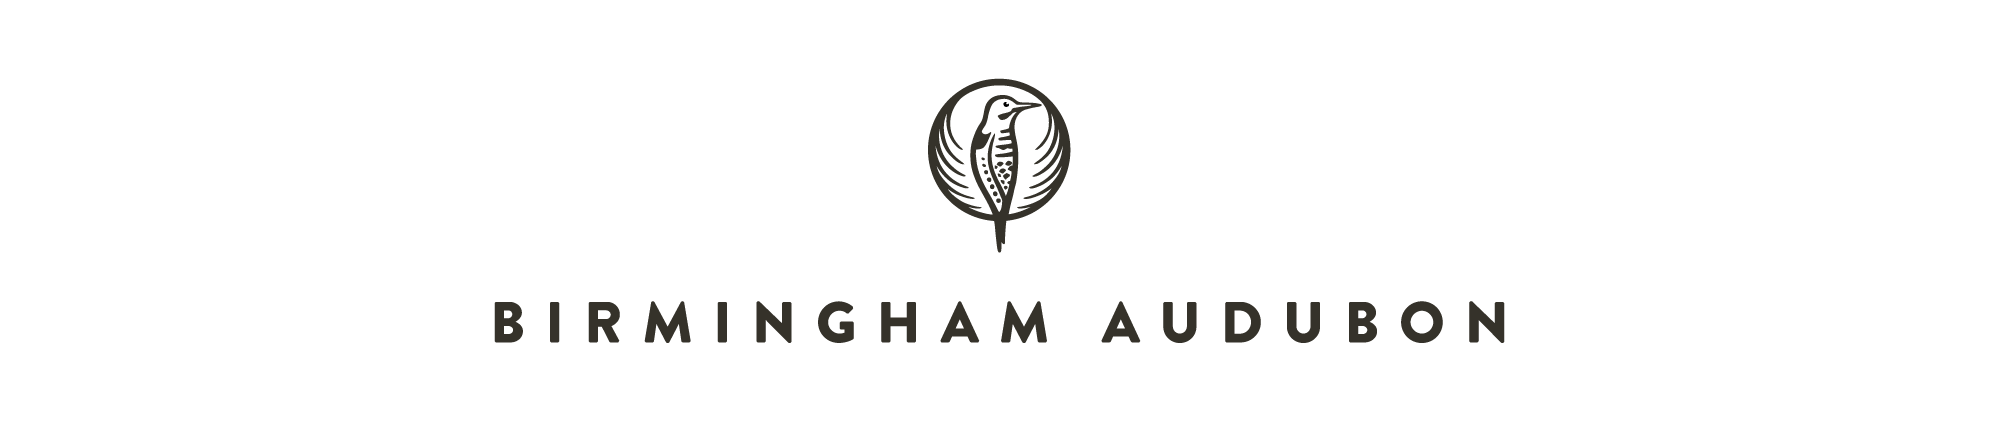 Birmingham Logo - Birmingham Audubon